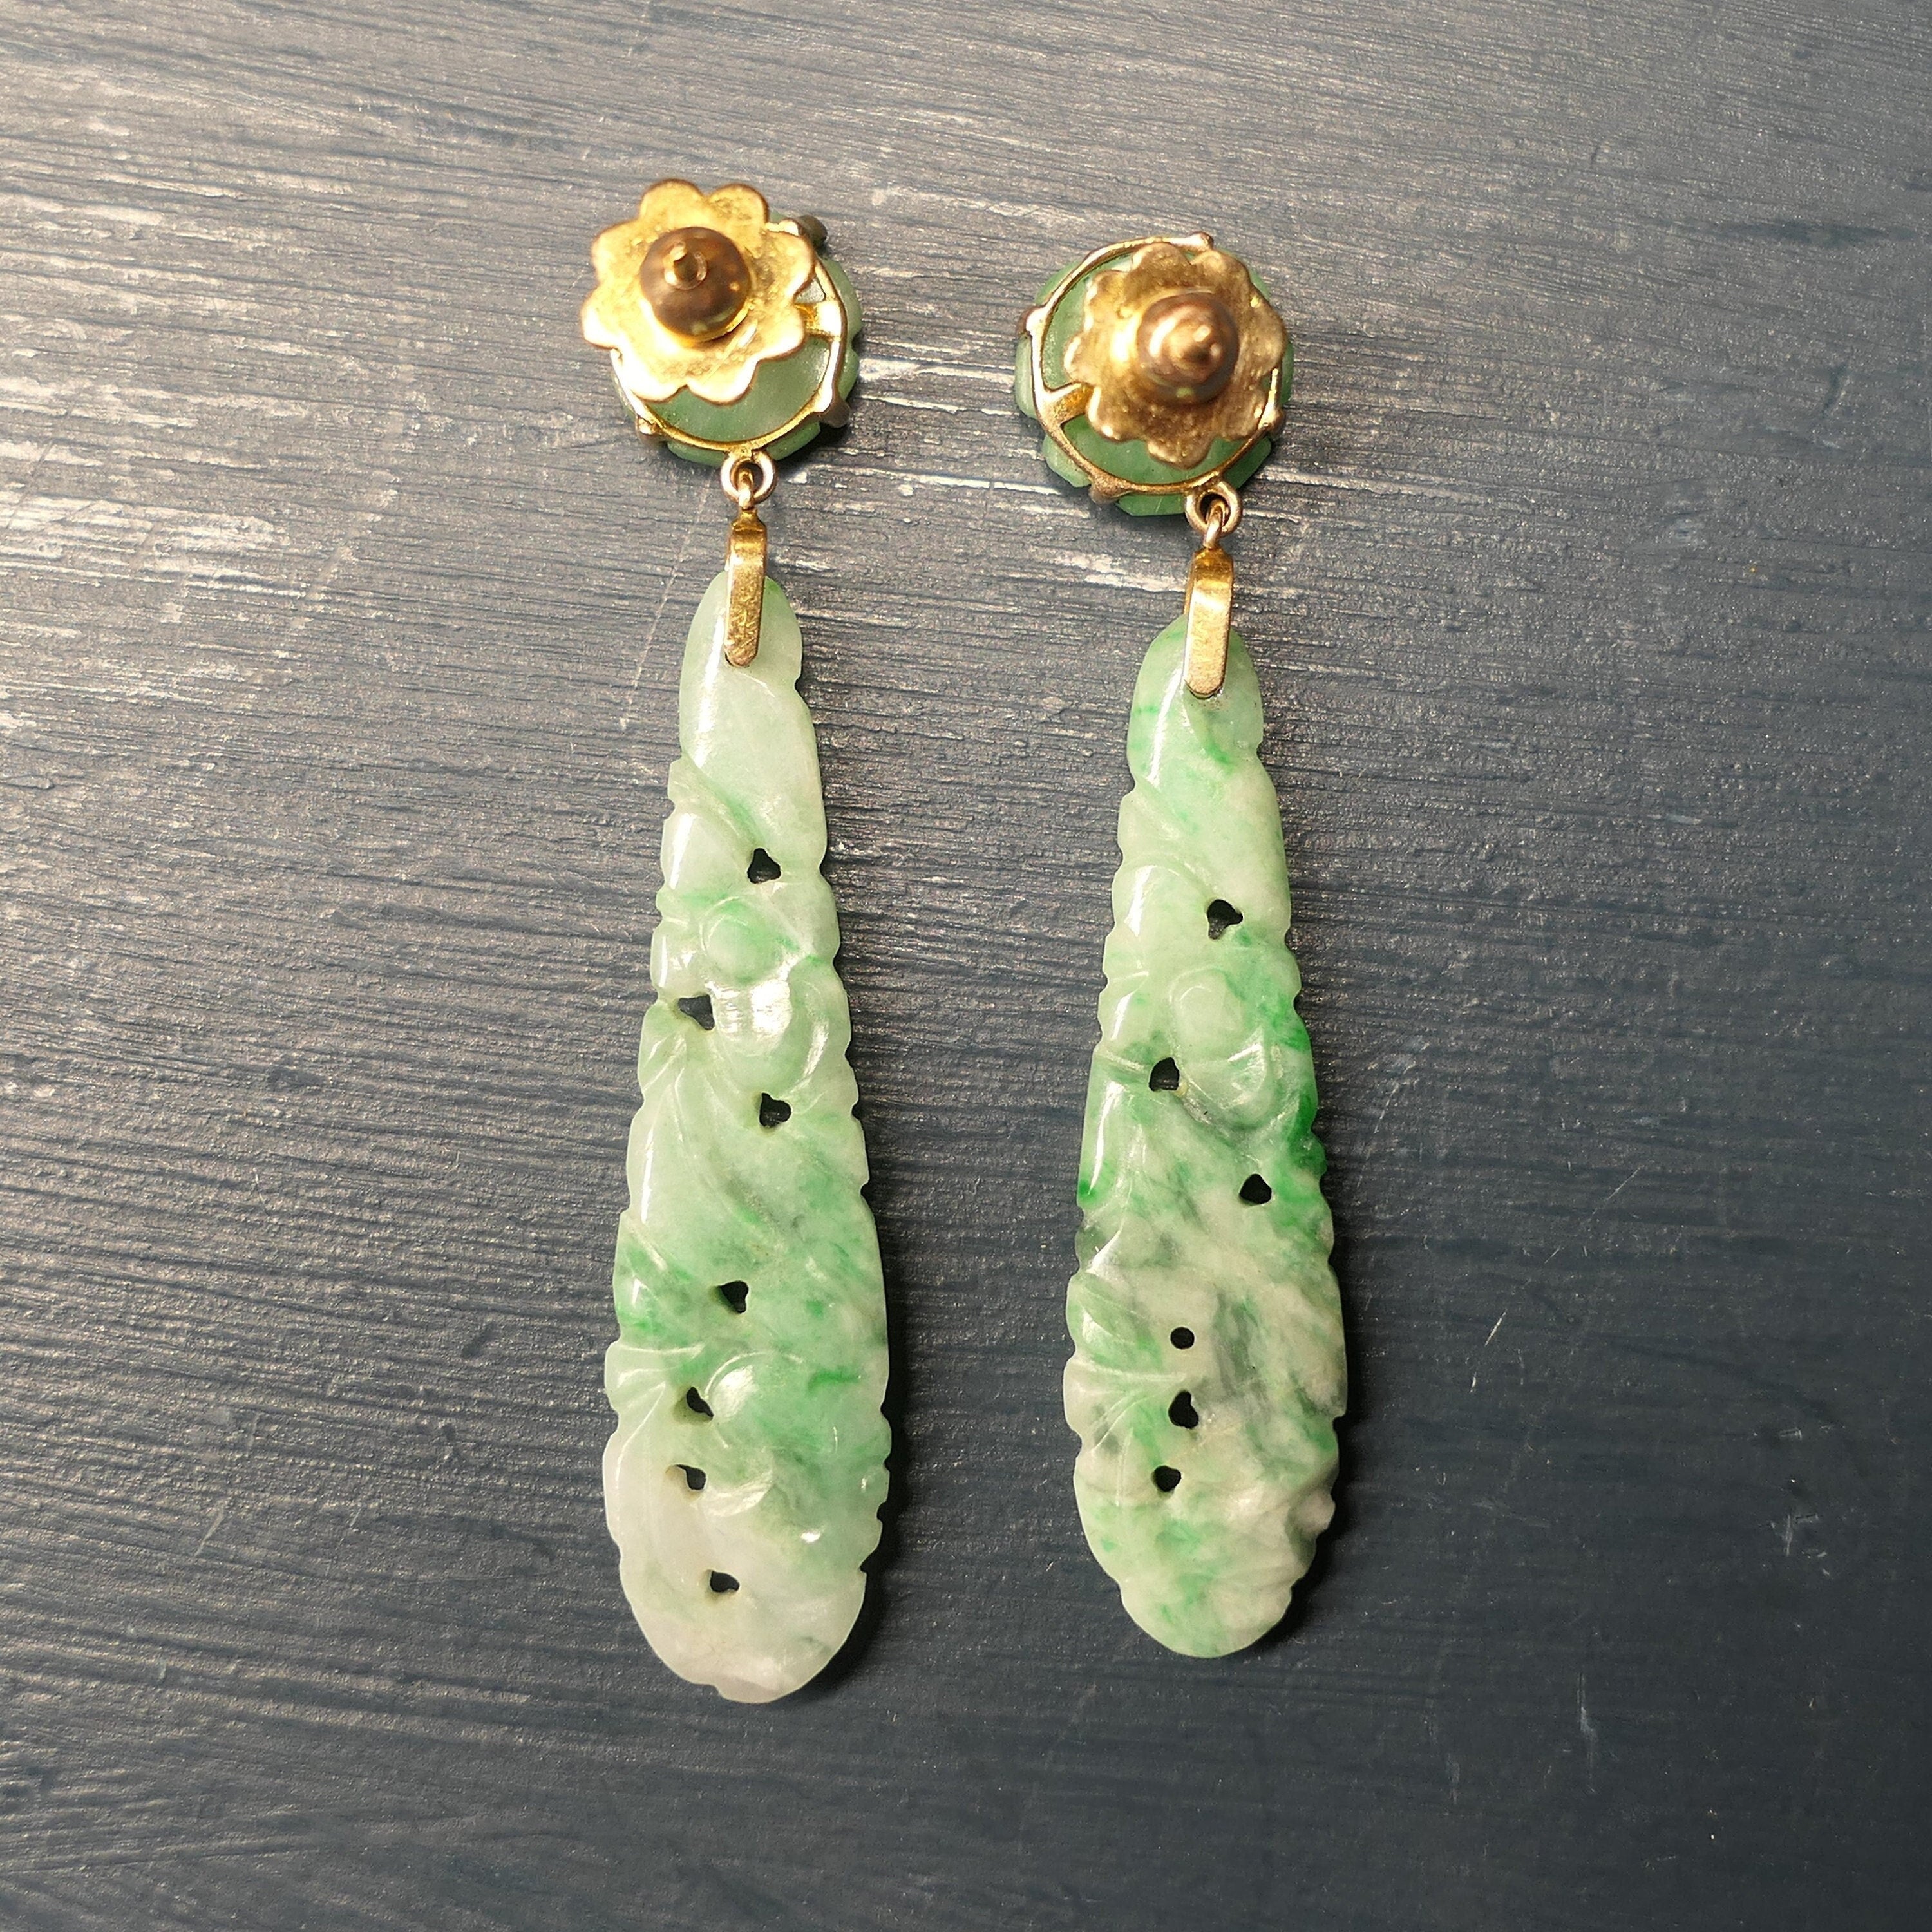 Original art deco carved pierced jade teardrop dangle earrings